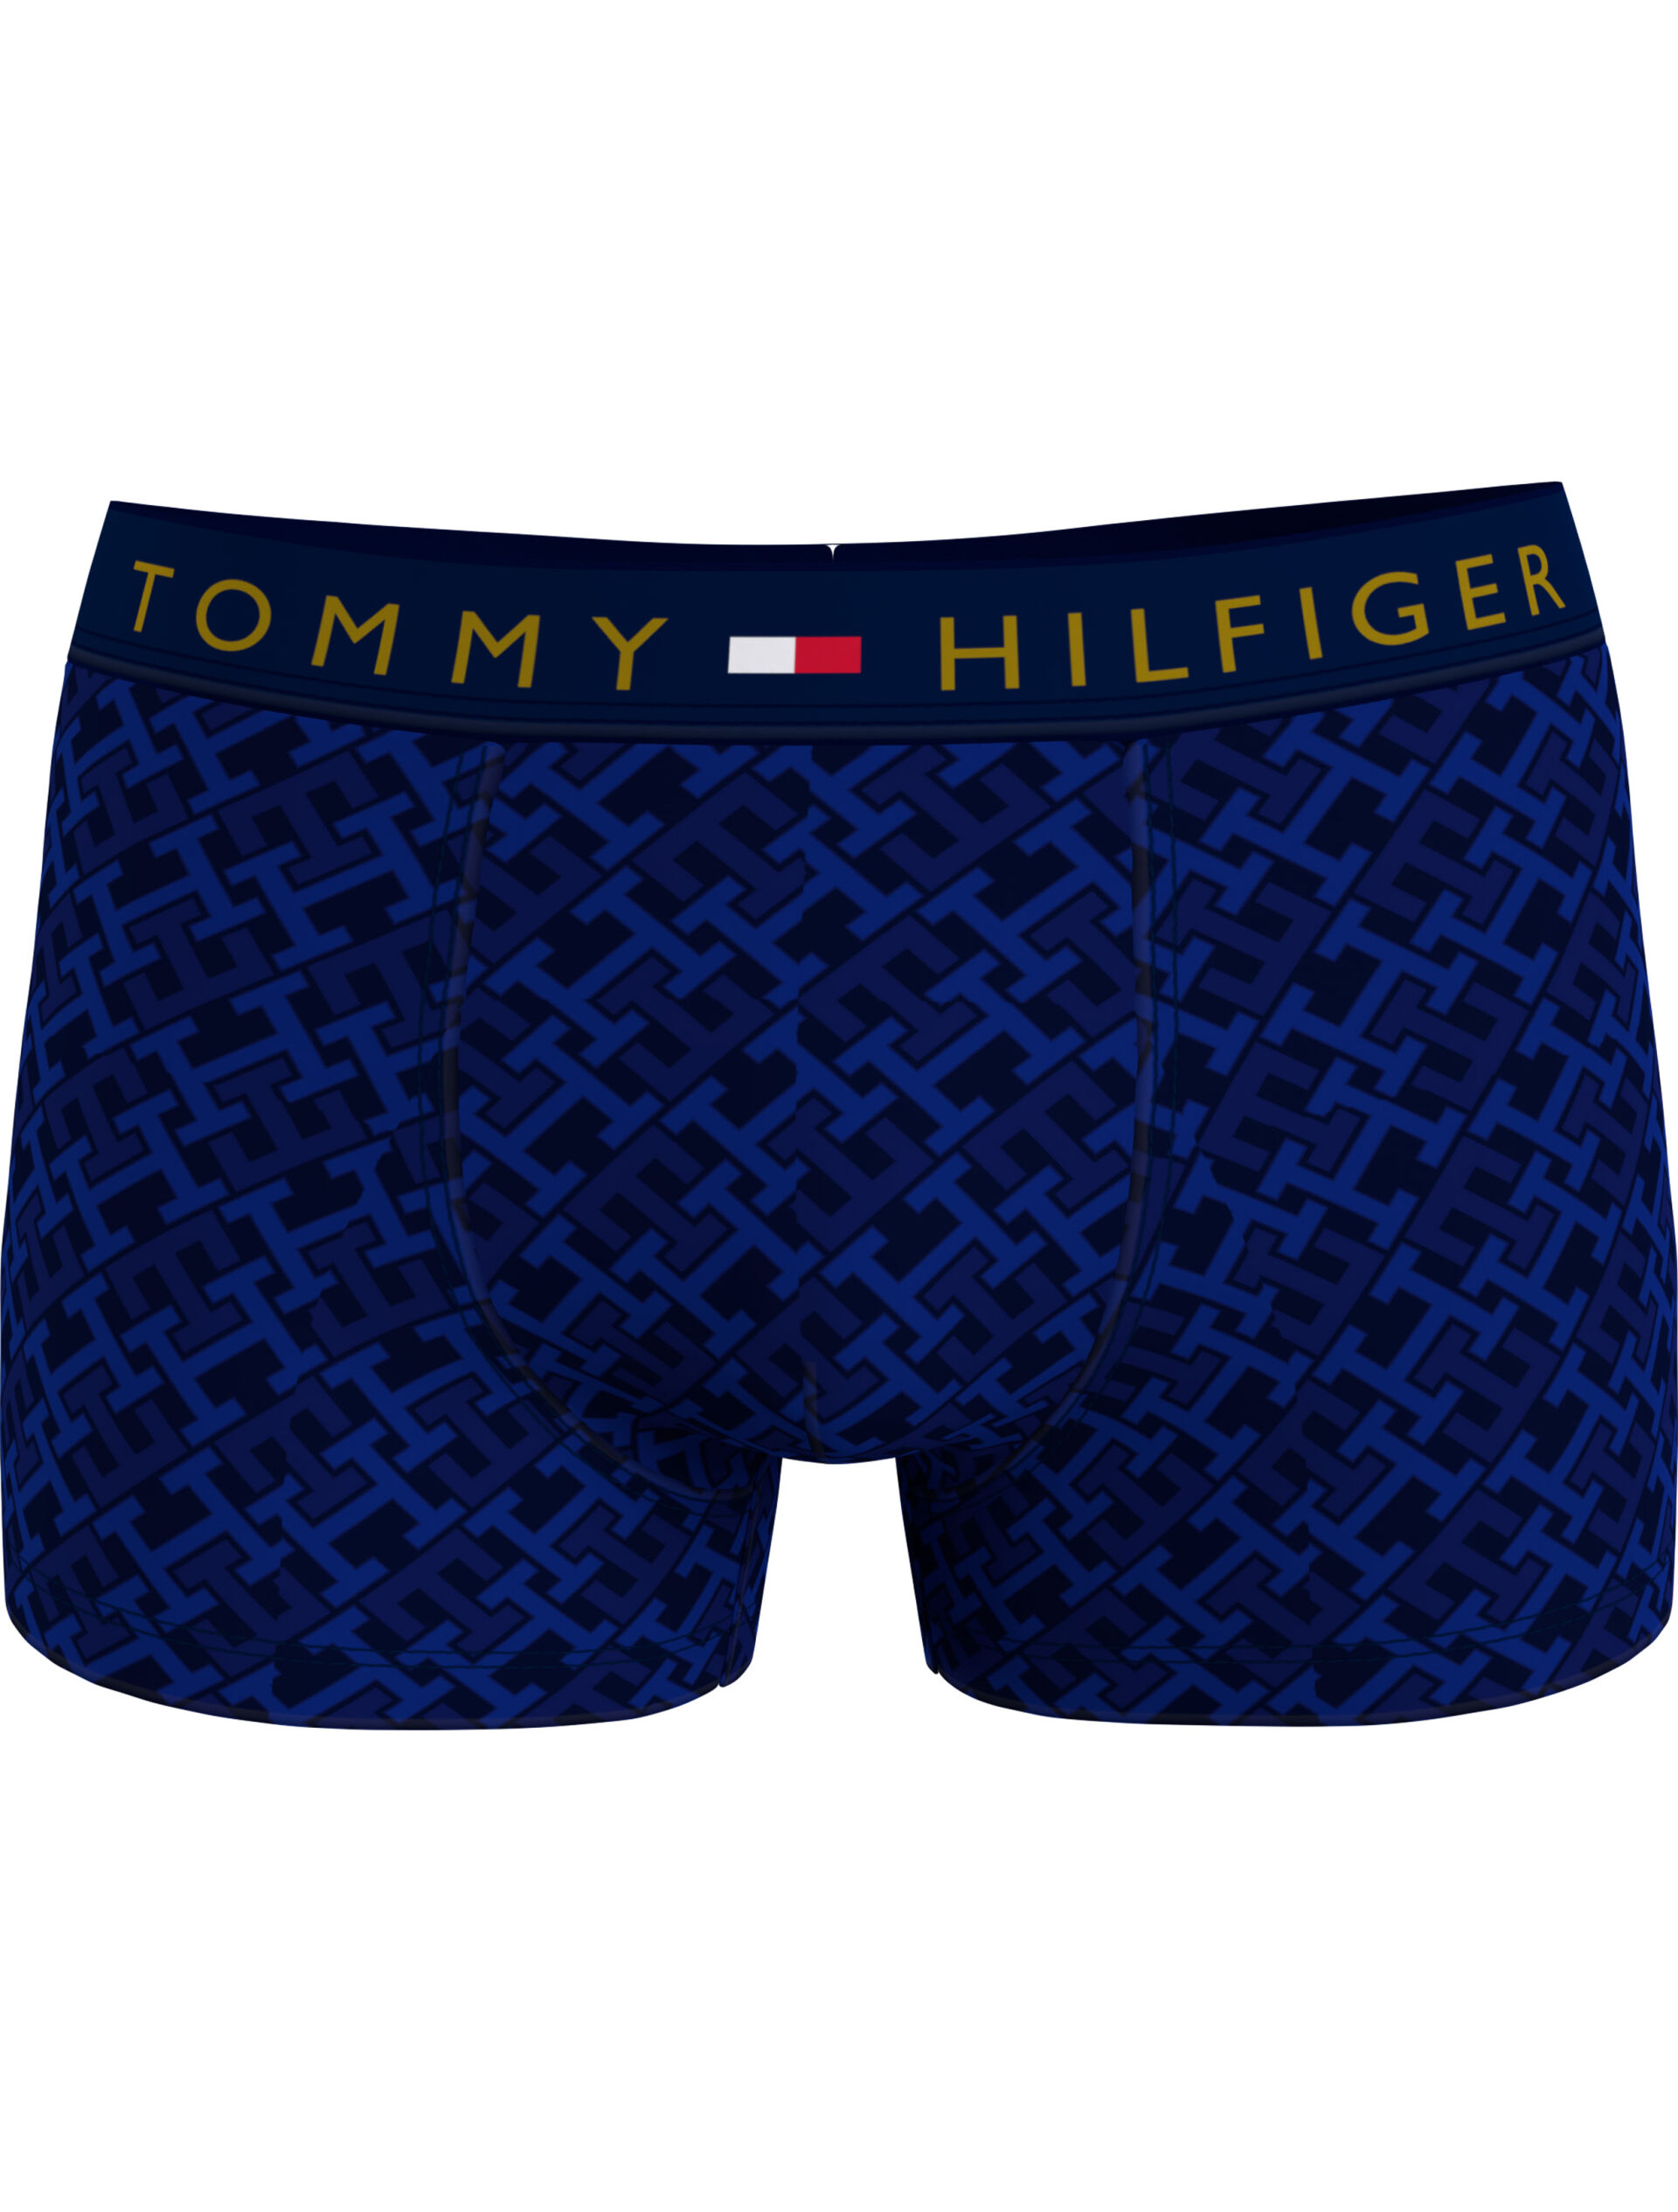 Tommy Hilfiger  Tights 90-900838